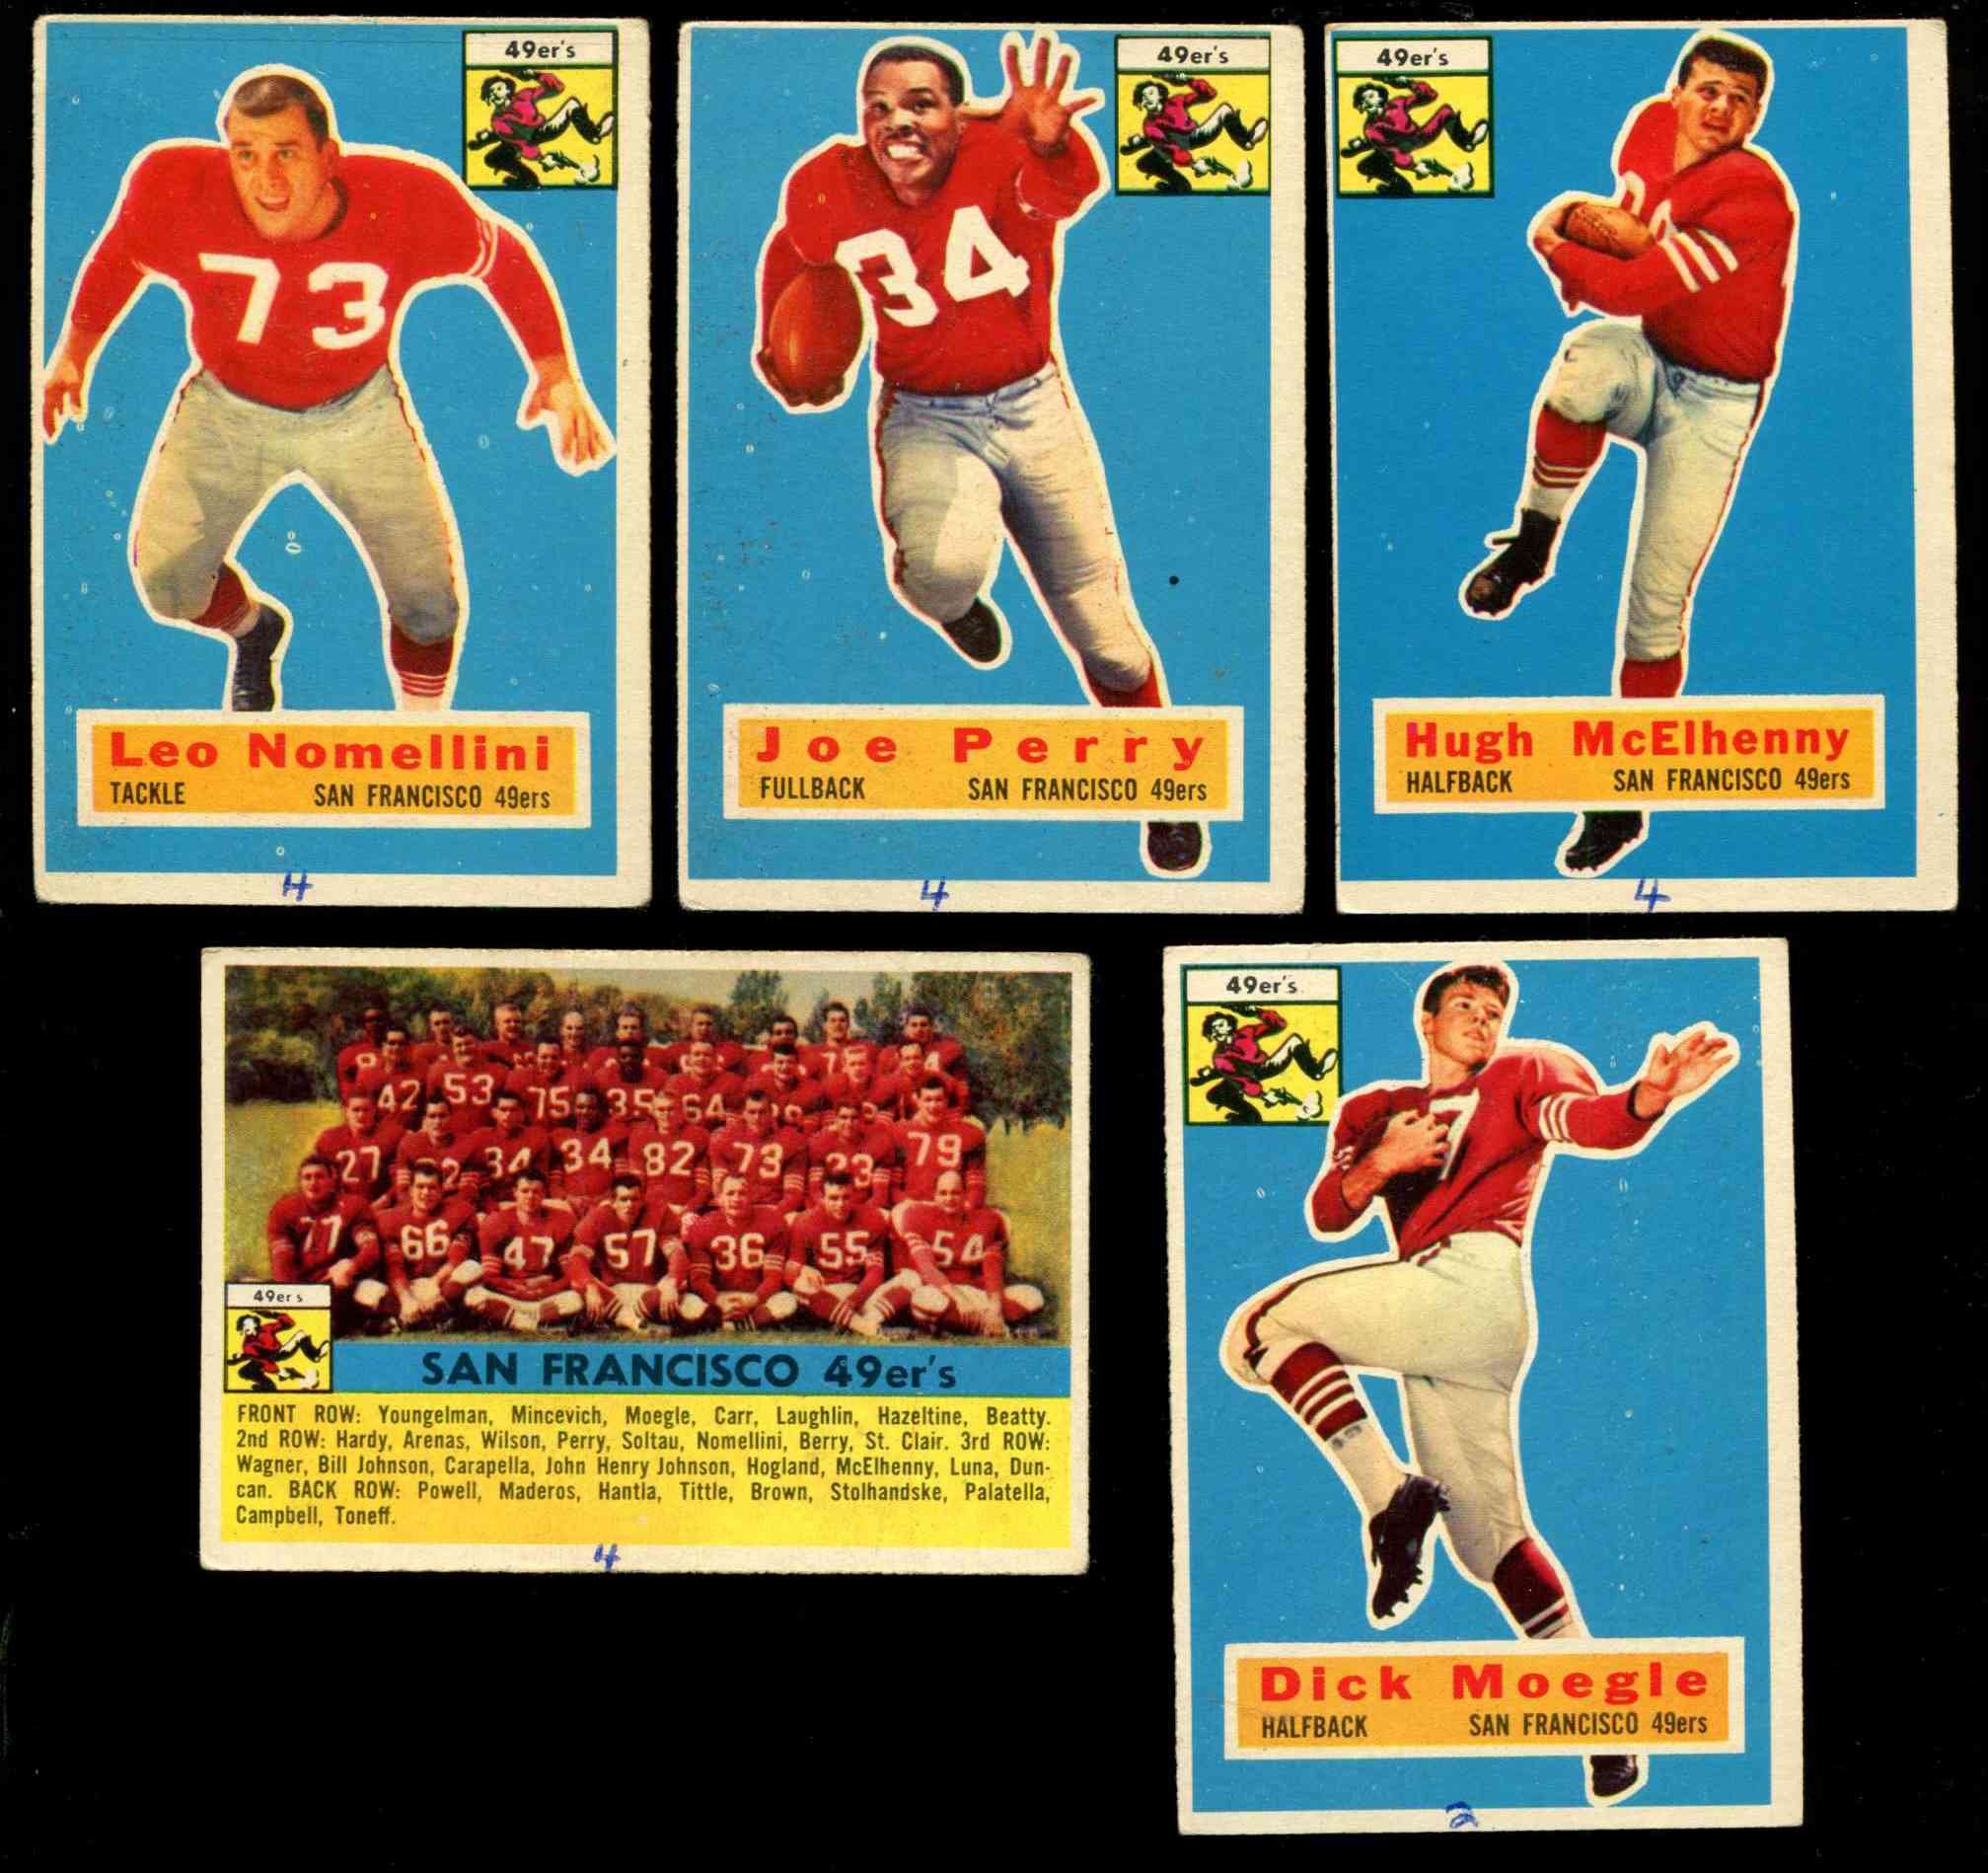  San Francisco 49ers - 1956 Topps Football Team Lot (5) w/Team card Football cards value